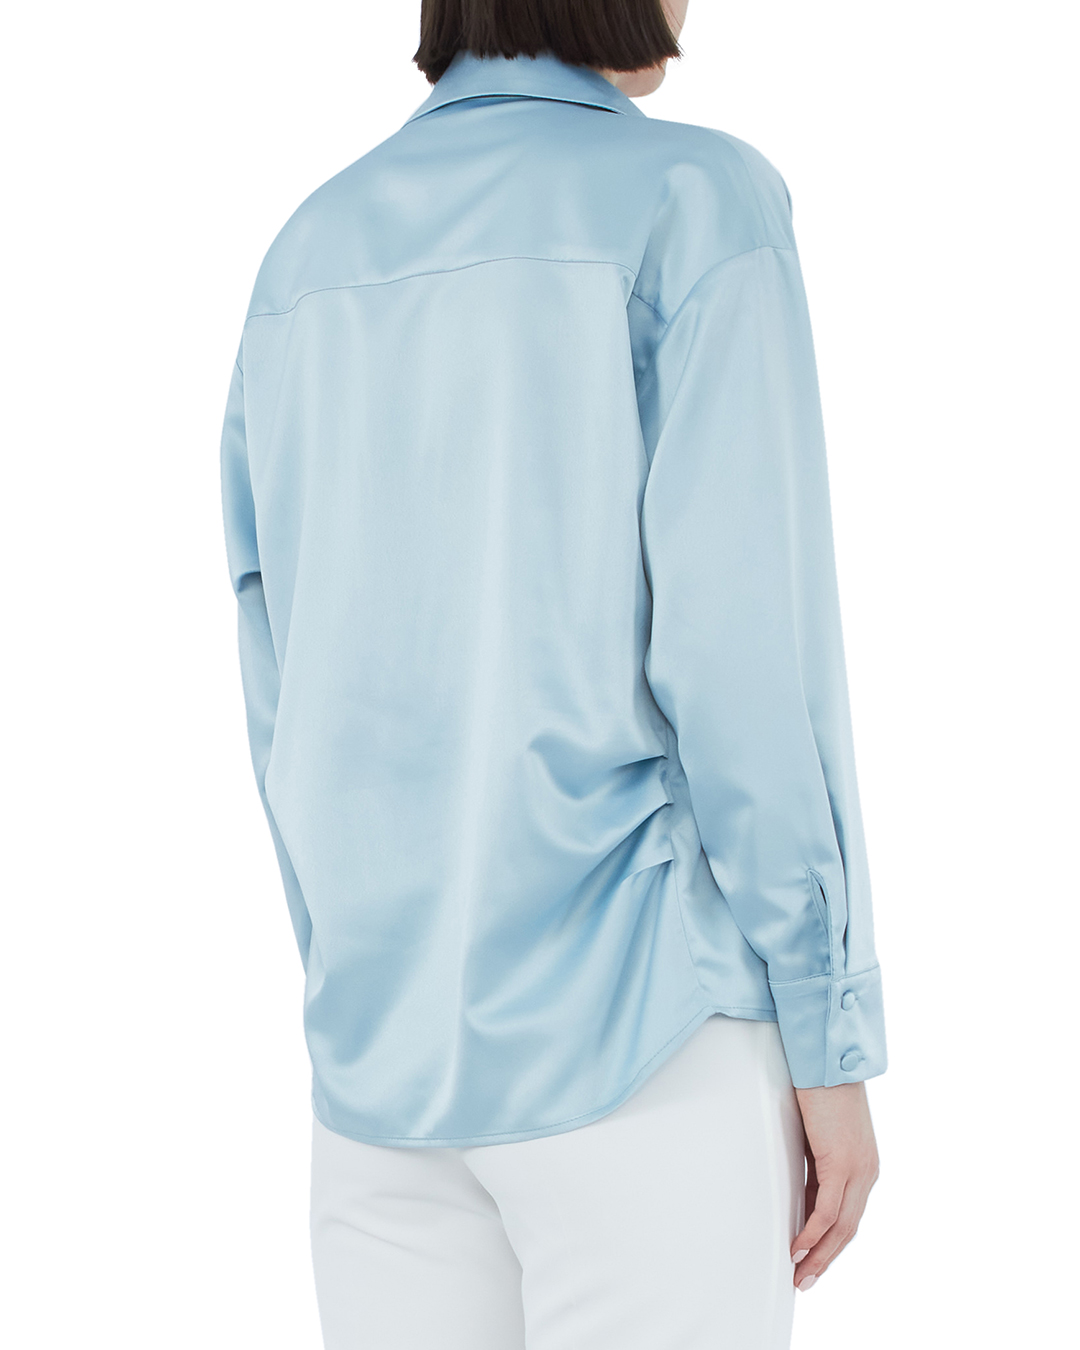 блуза ACTUALEE 000528 голубой 44, размер 44 - фото 3